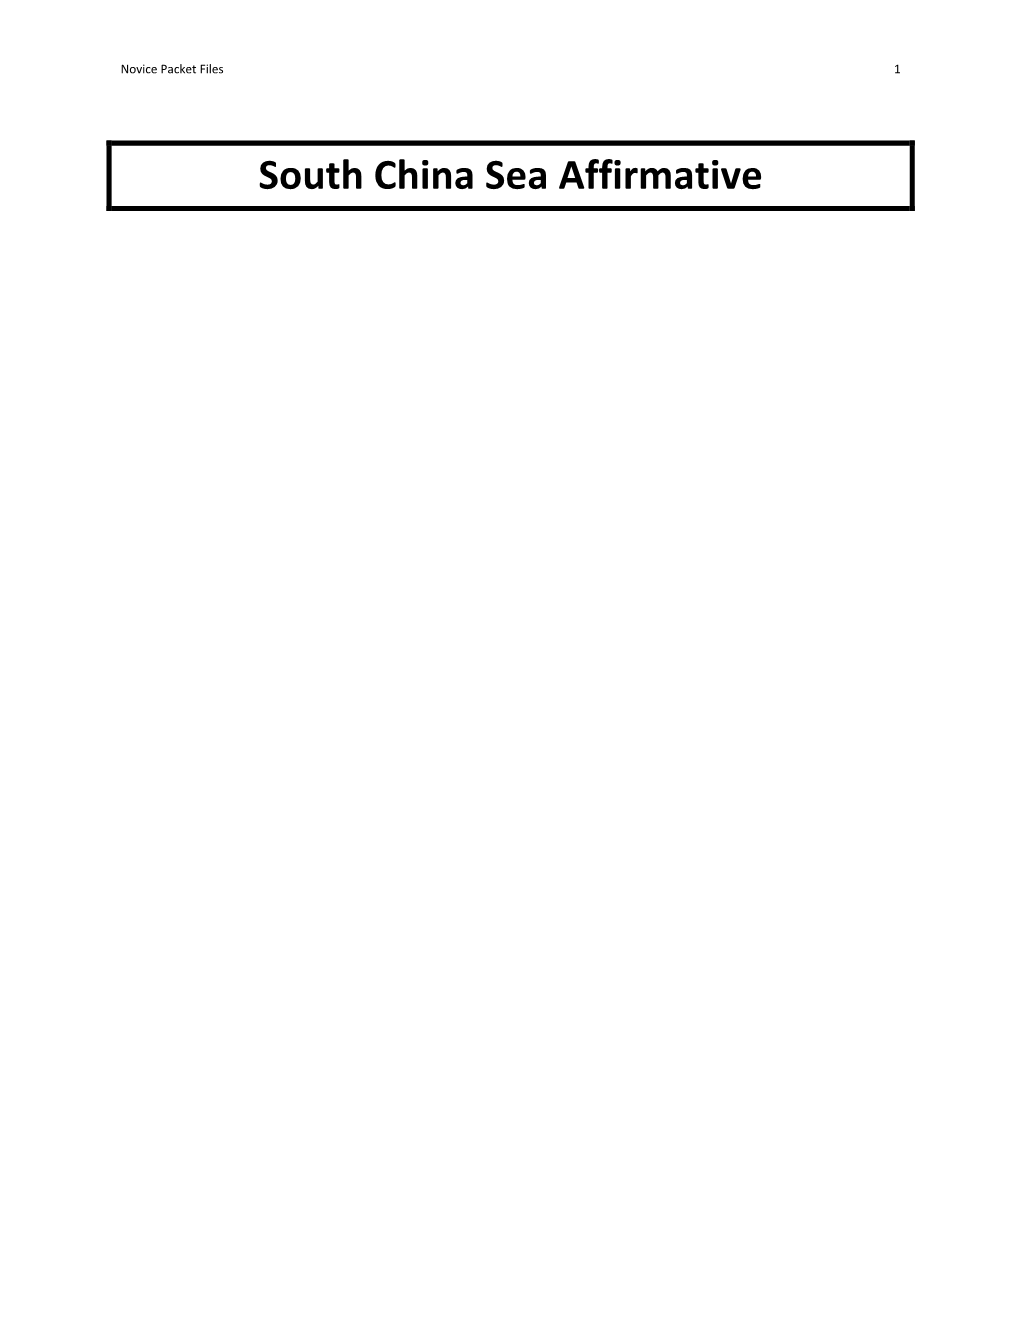 South China Sea Affirmative